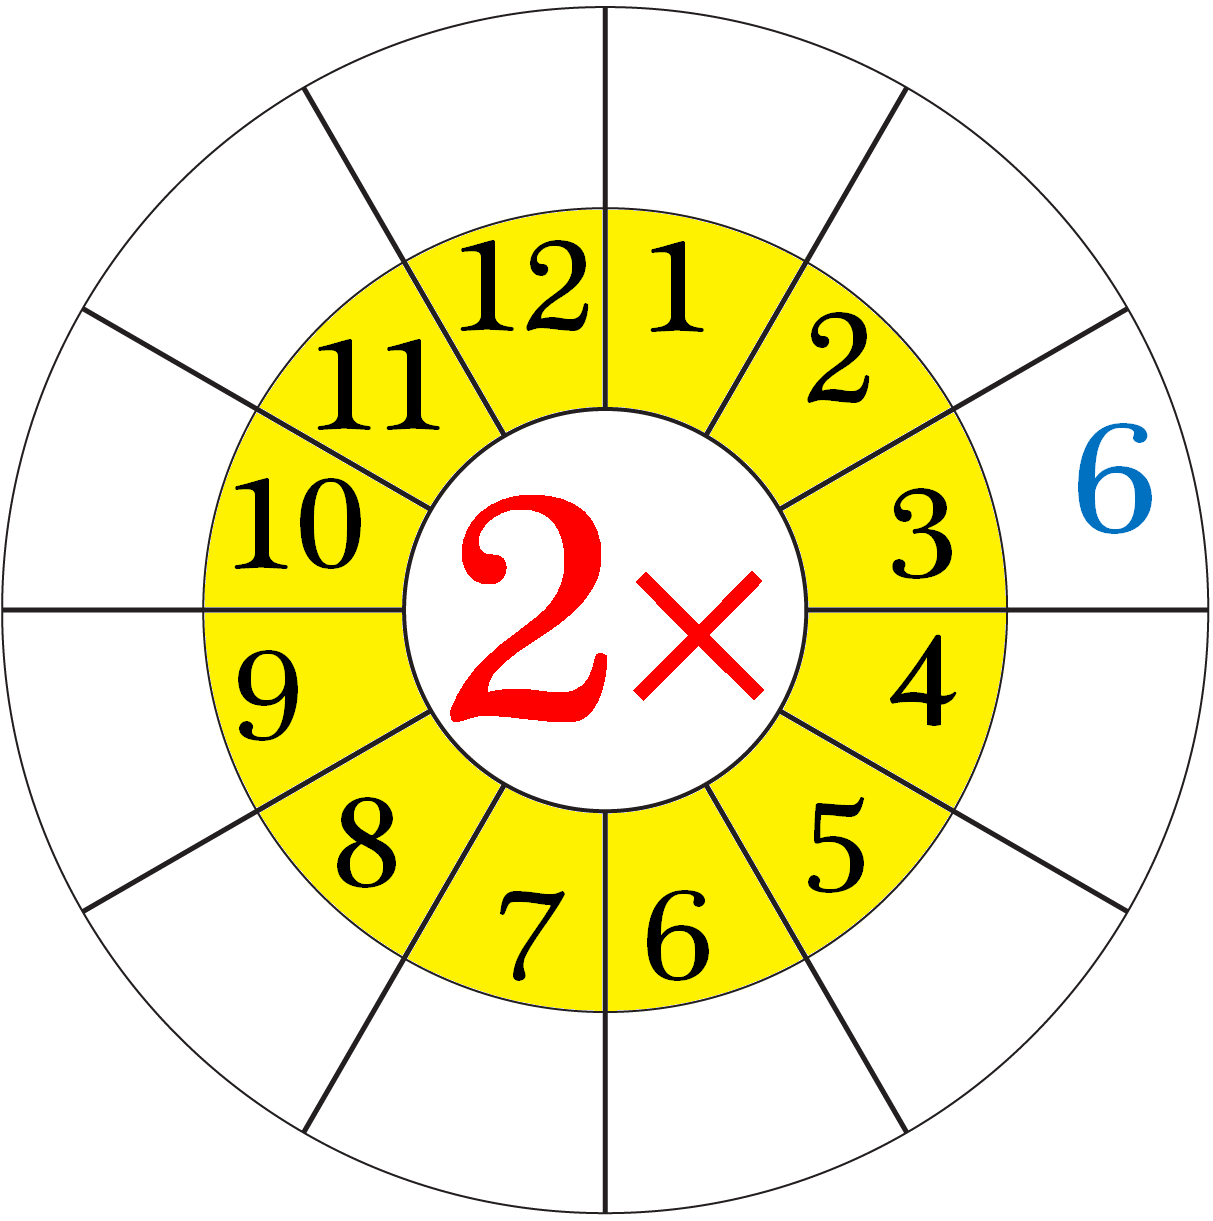 Worksheet on Multiplication Table of 2